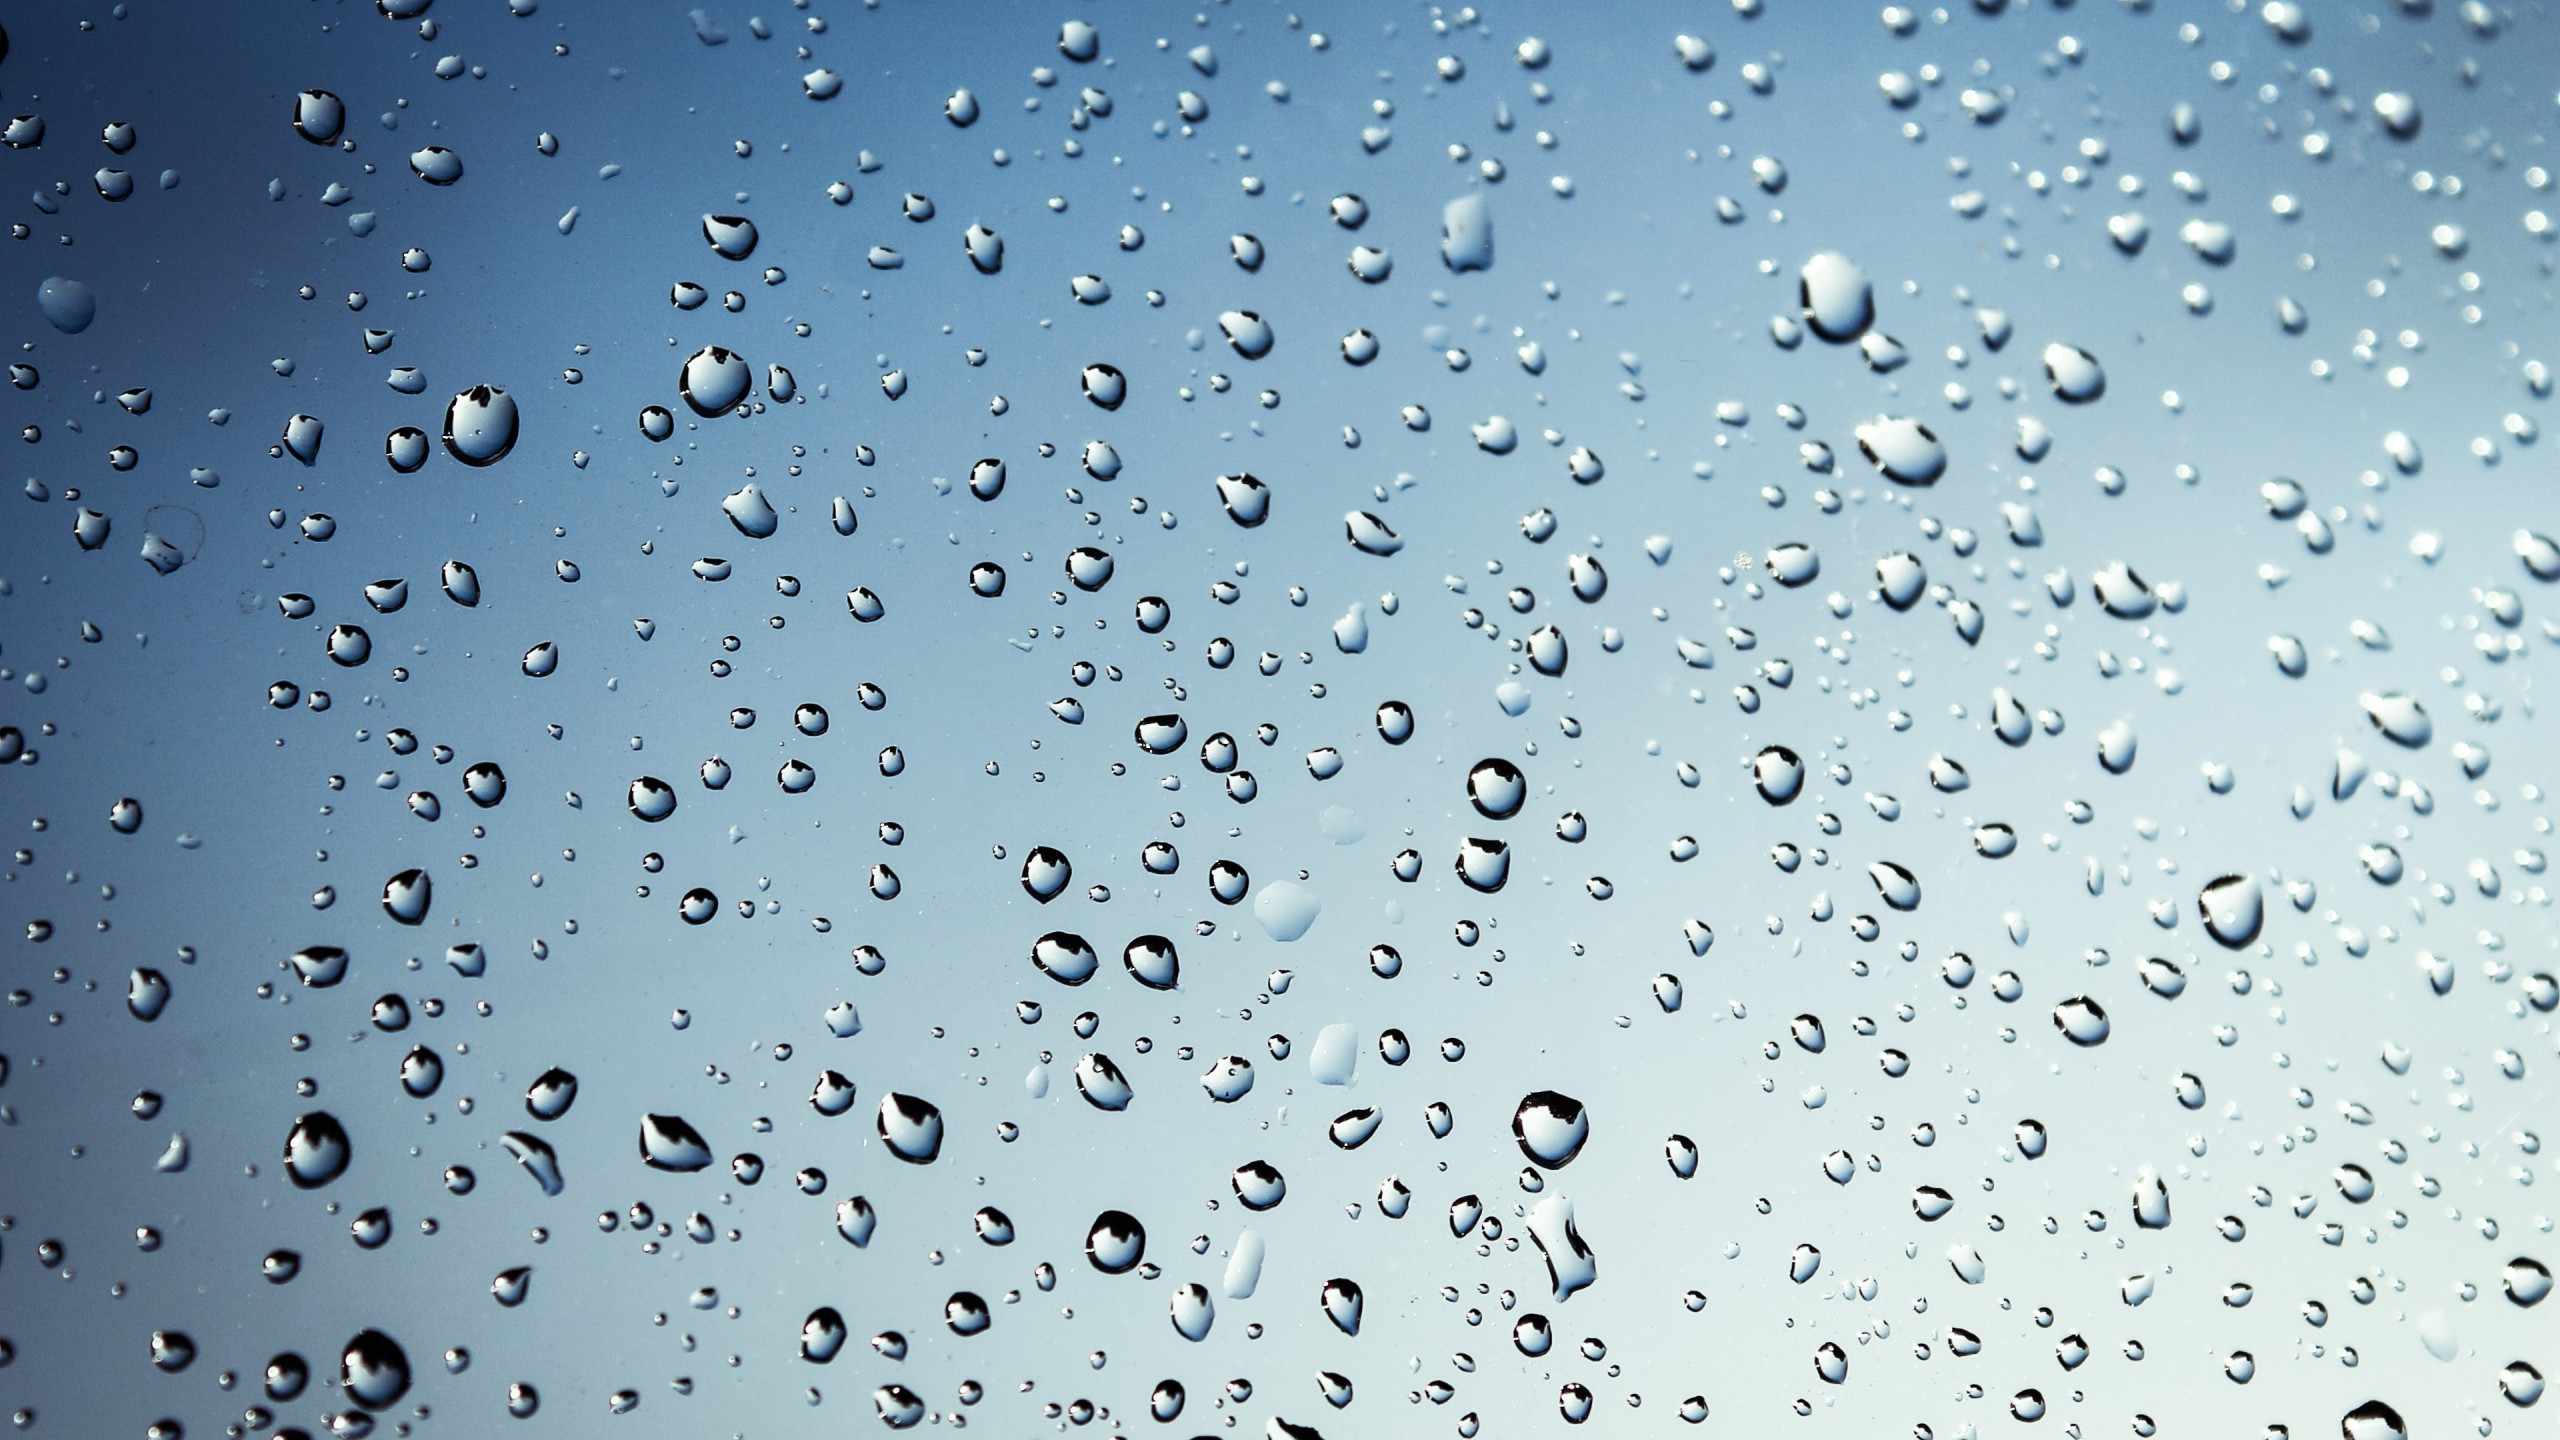 Rain drops on window wallpaper 2560x1440